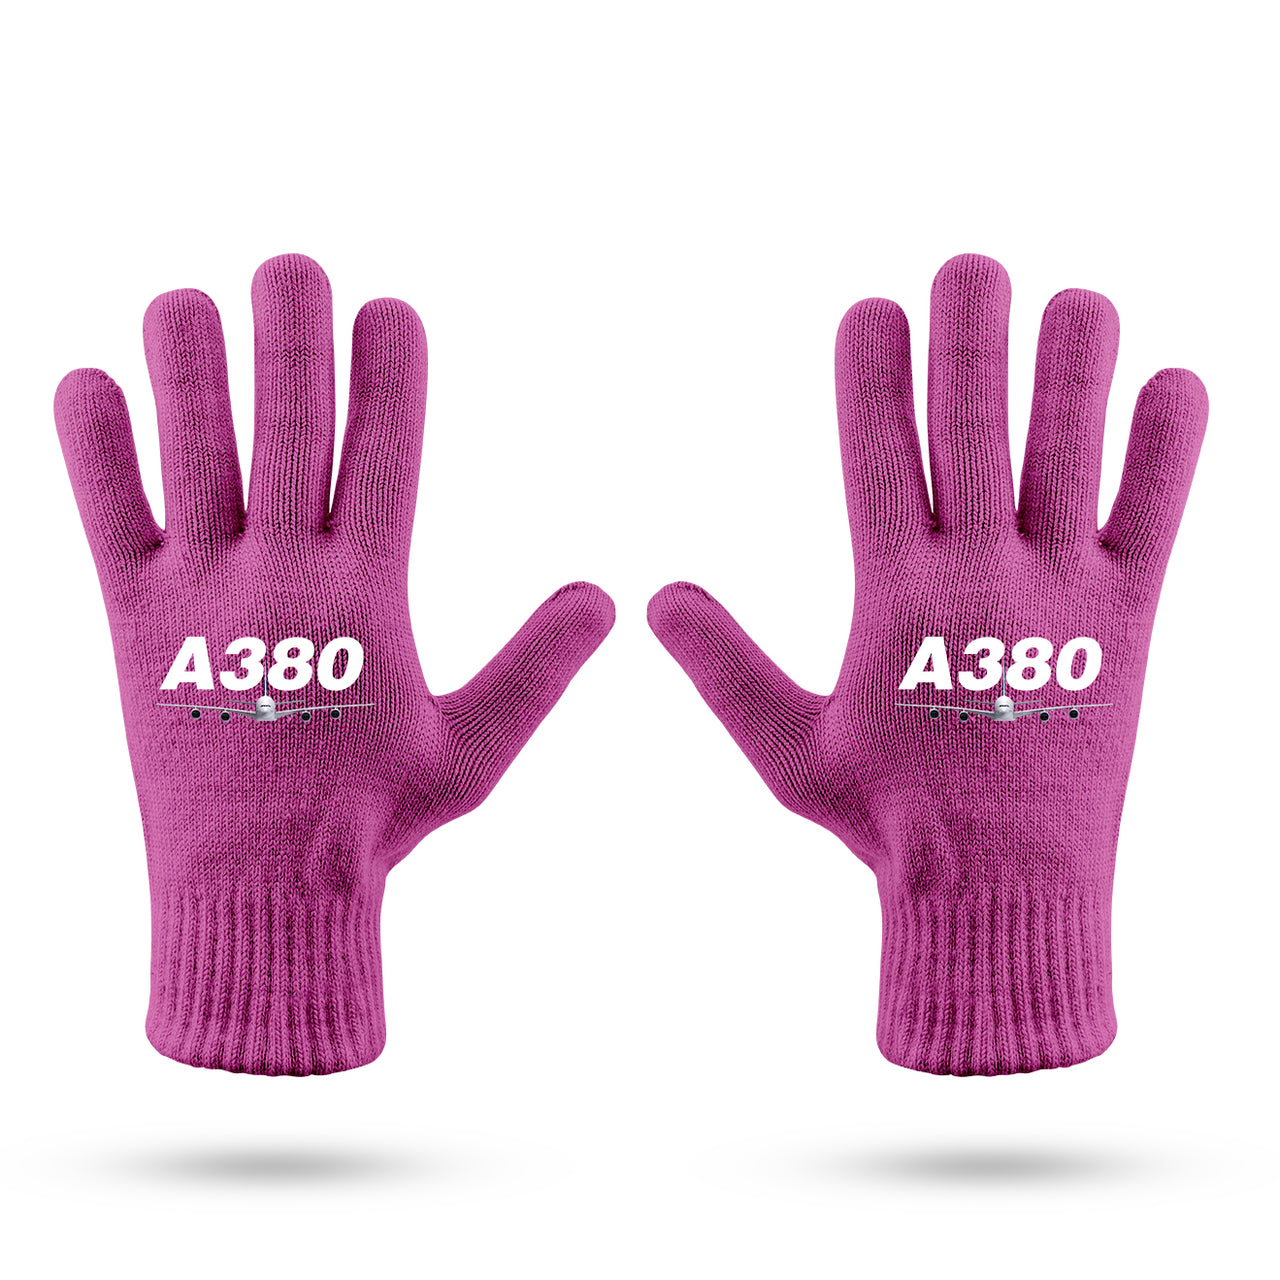 Super Airbus A380 Designed Gloves